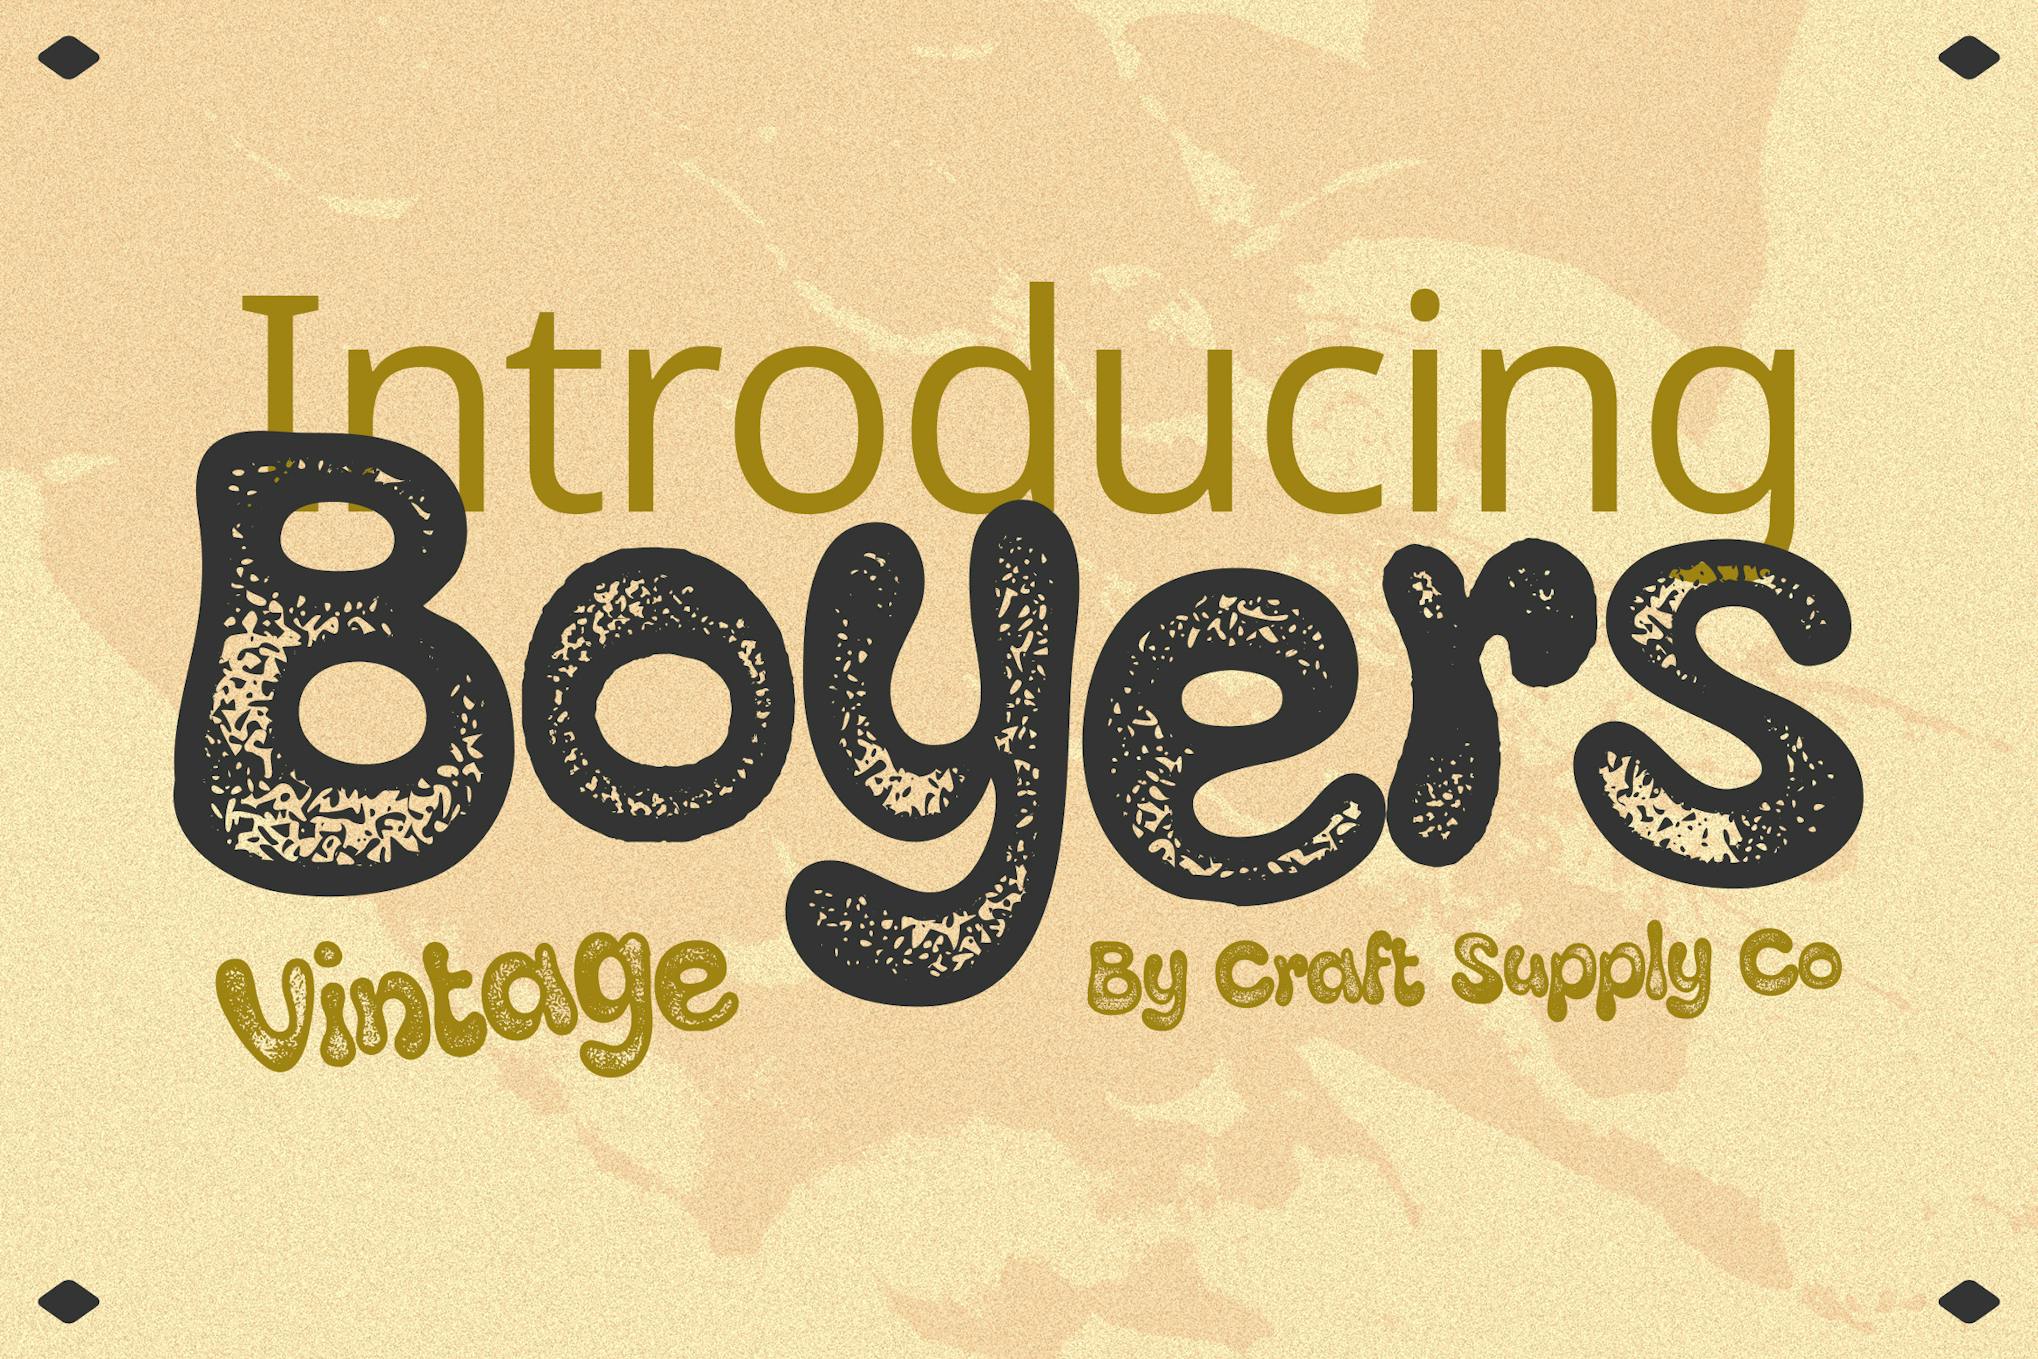 Boyers Vintage